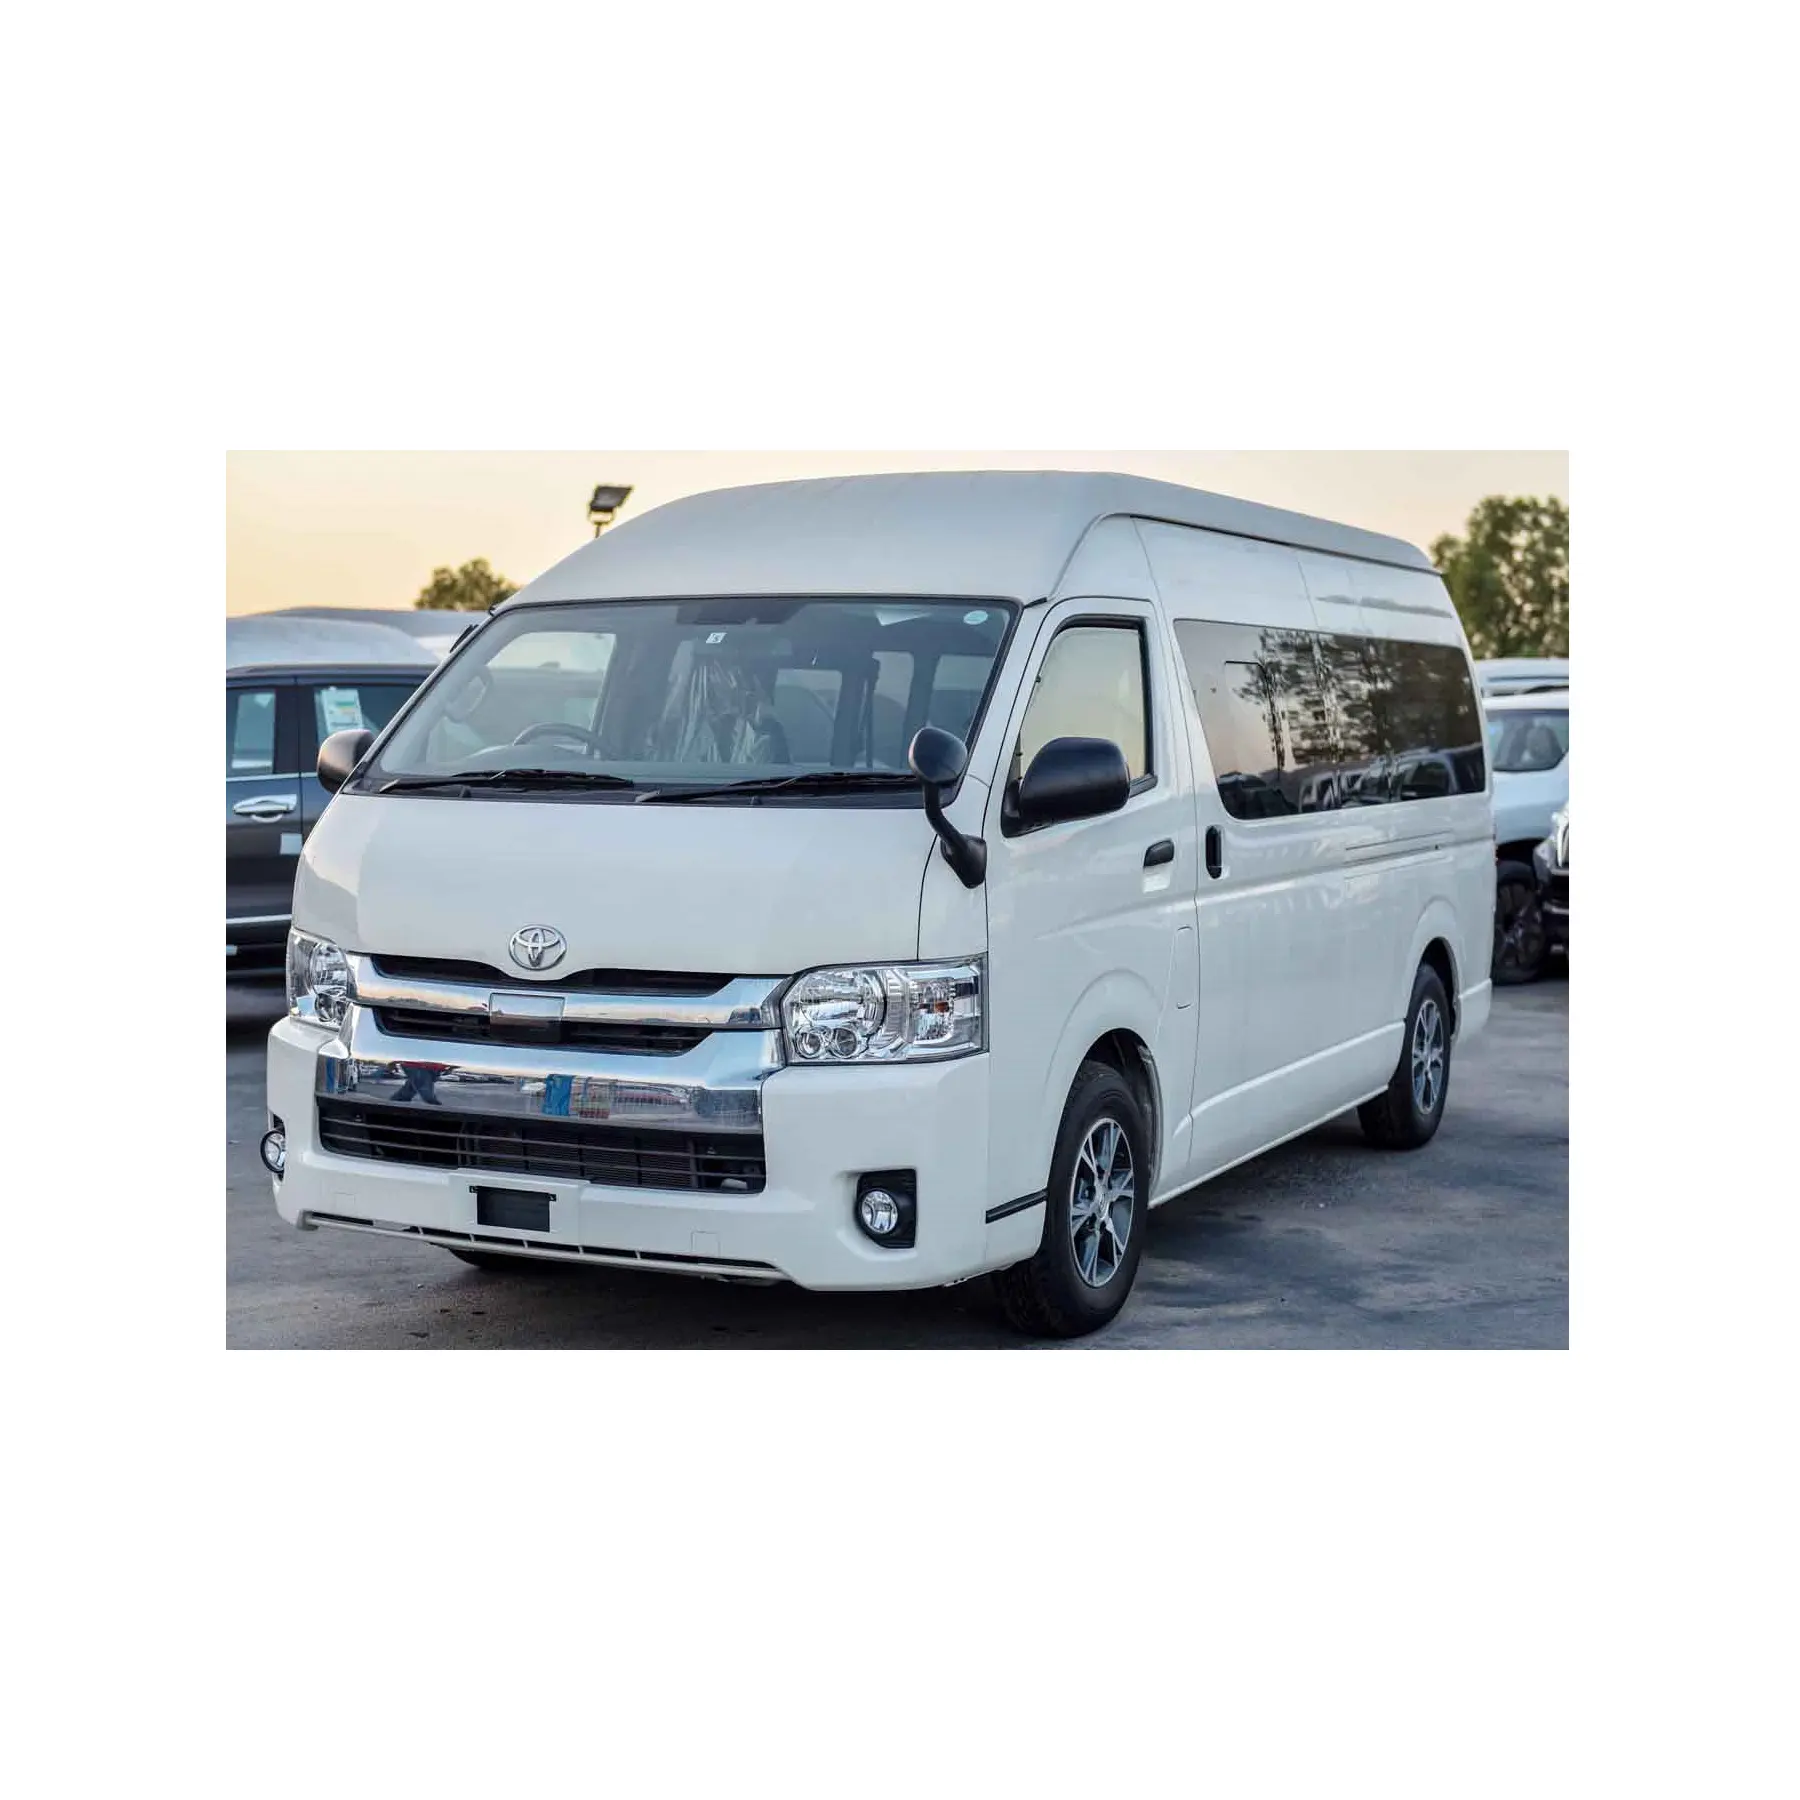 HOT TRENDING USD Toyota Hiace Minibus 2020 2021 2022 2023 Hochdach Van Linkslenker 2TR 13-15 Sitze Gebraucht Toyota Hiace Bus